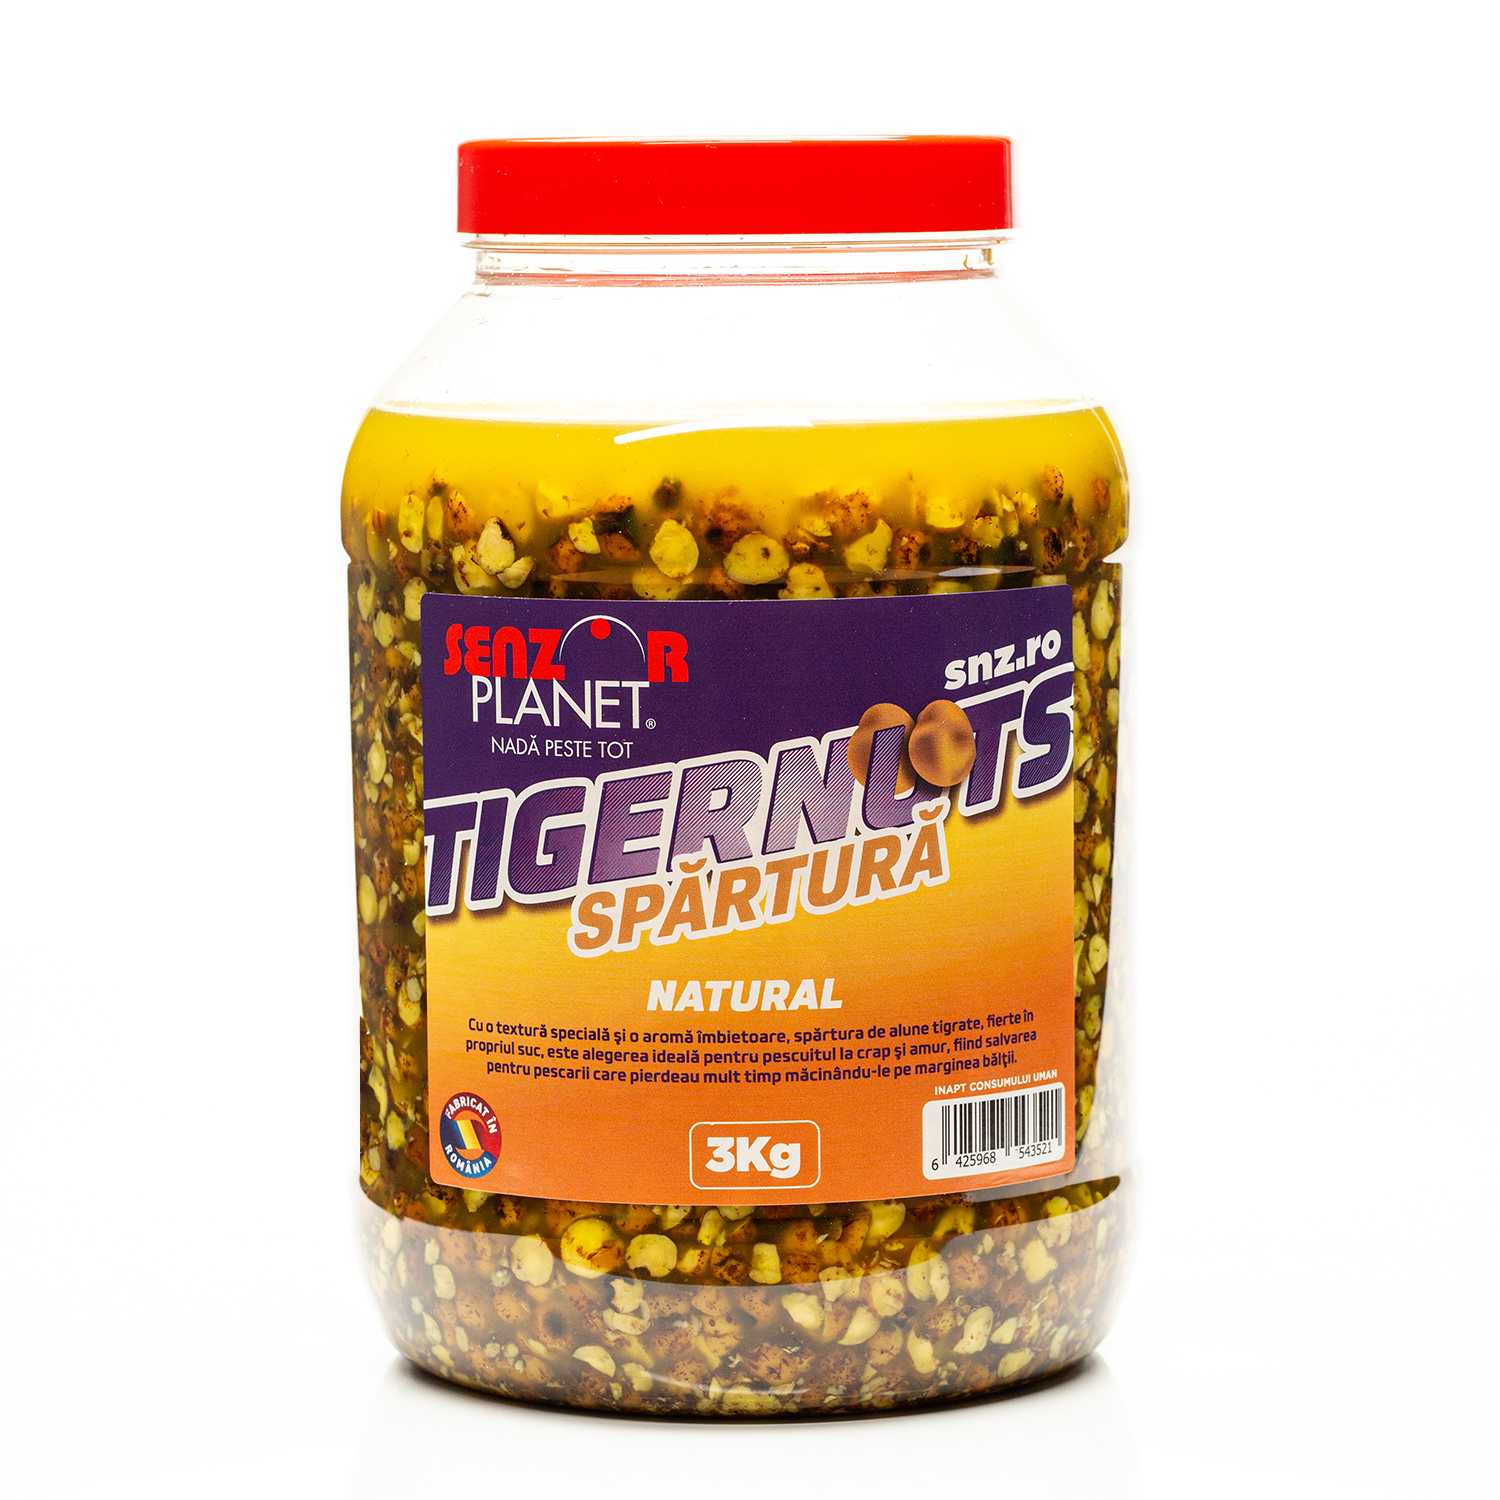 SPARTURA TIGERNUTS NATURAL 3kg
